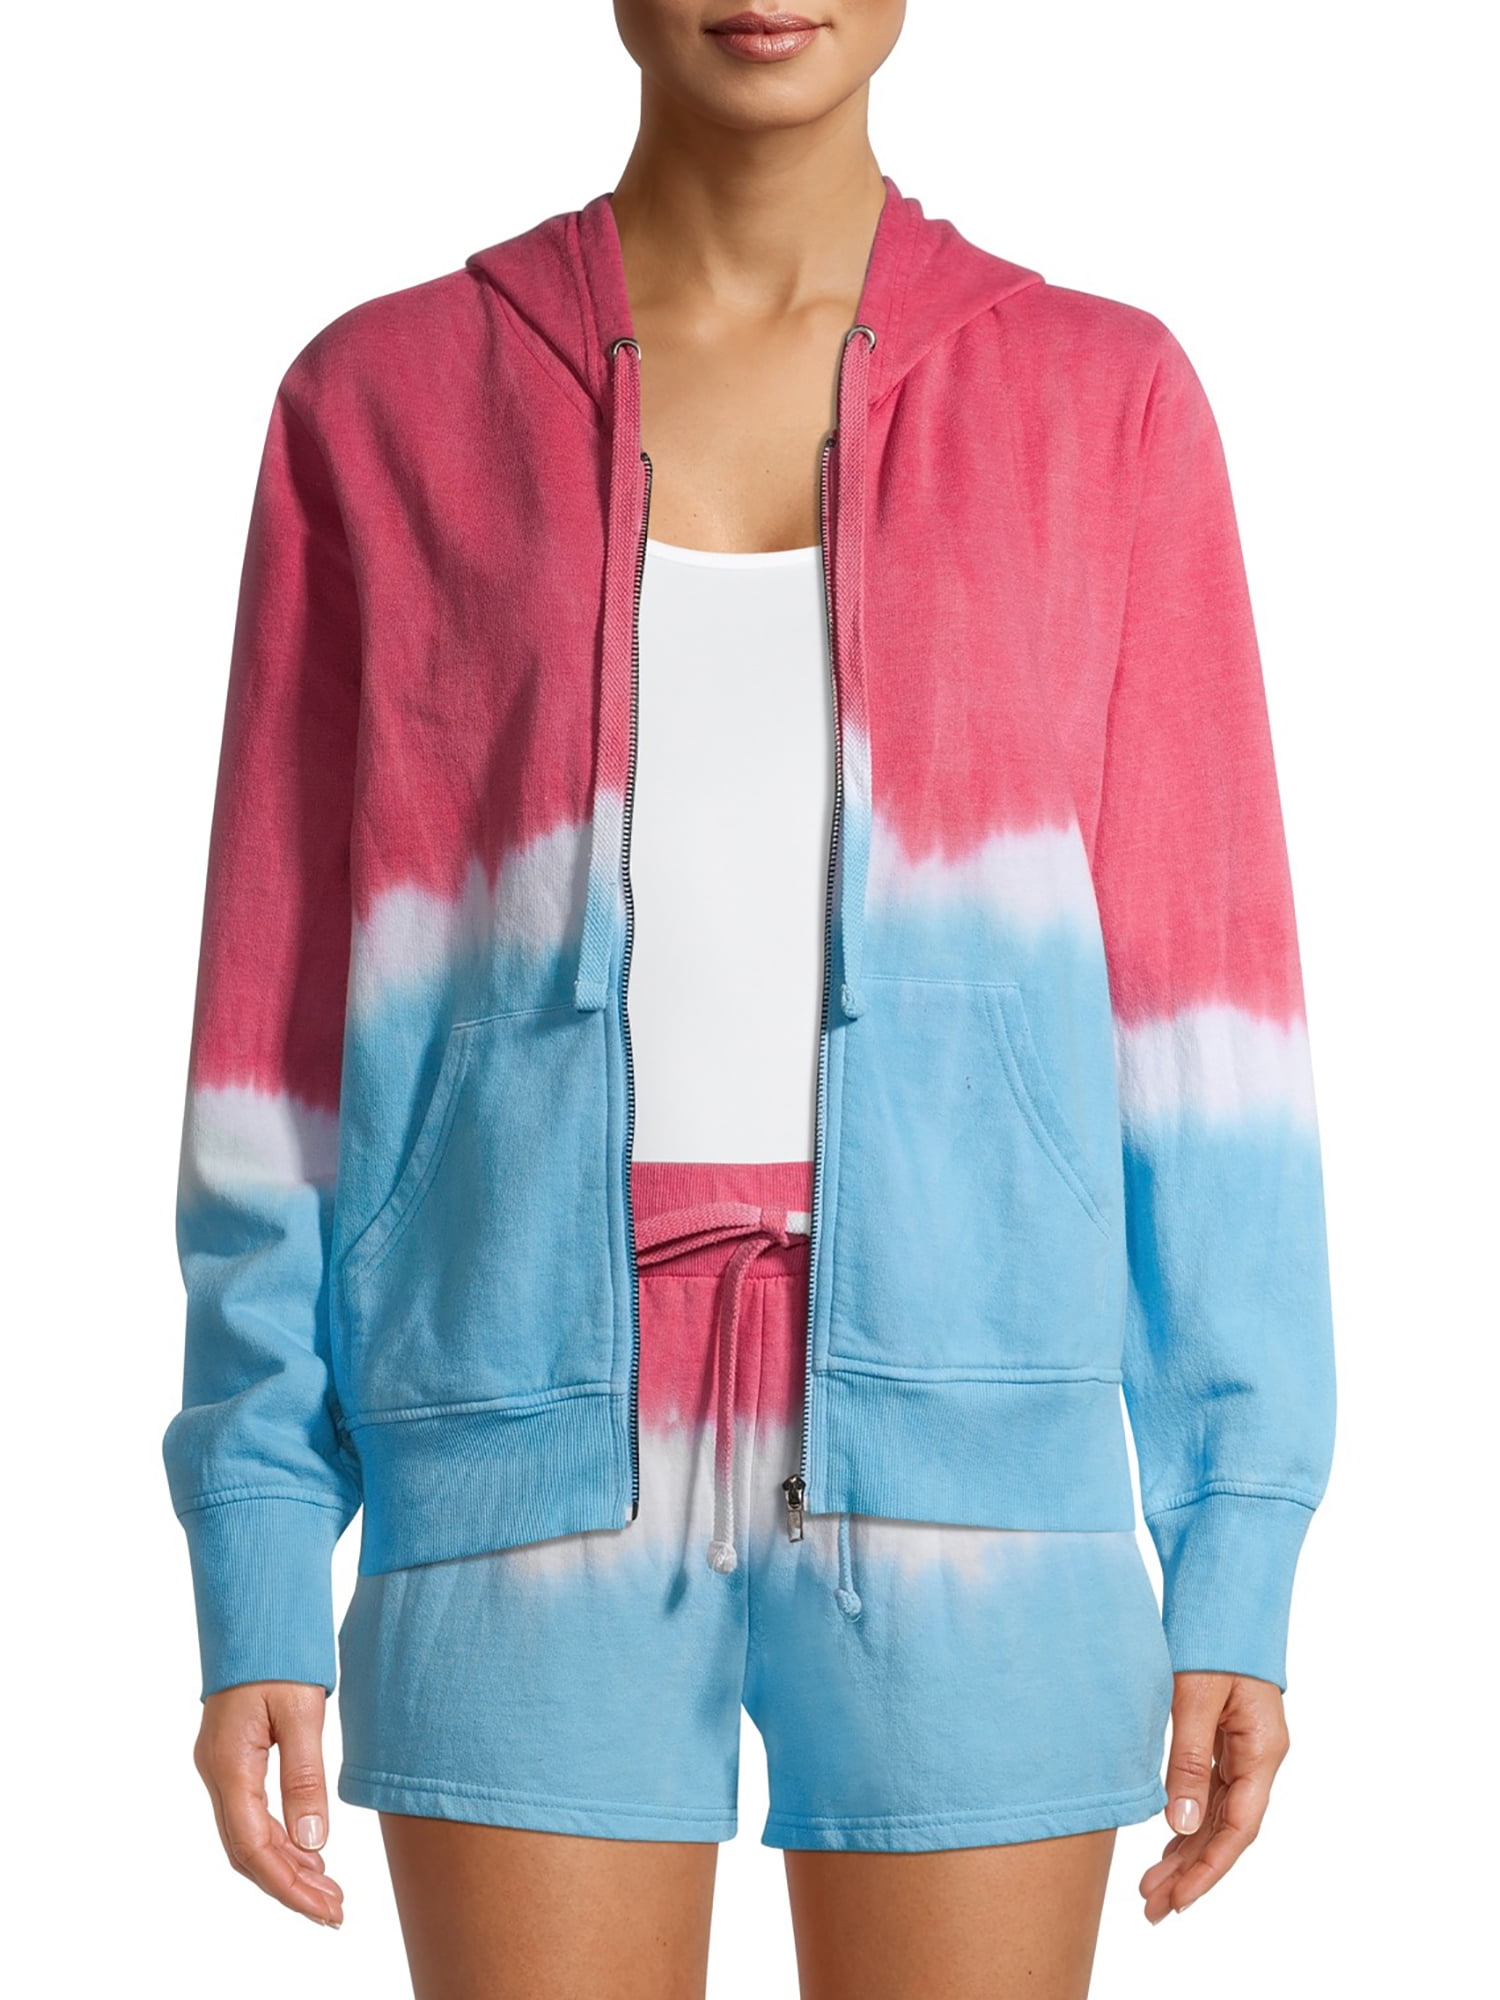 DKNY Girl Pink Blue Tie Dye Cotton Fleece Sleeveless Jumper Hoodie Jacket Top